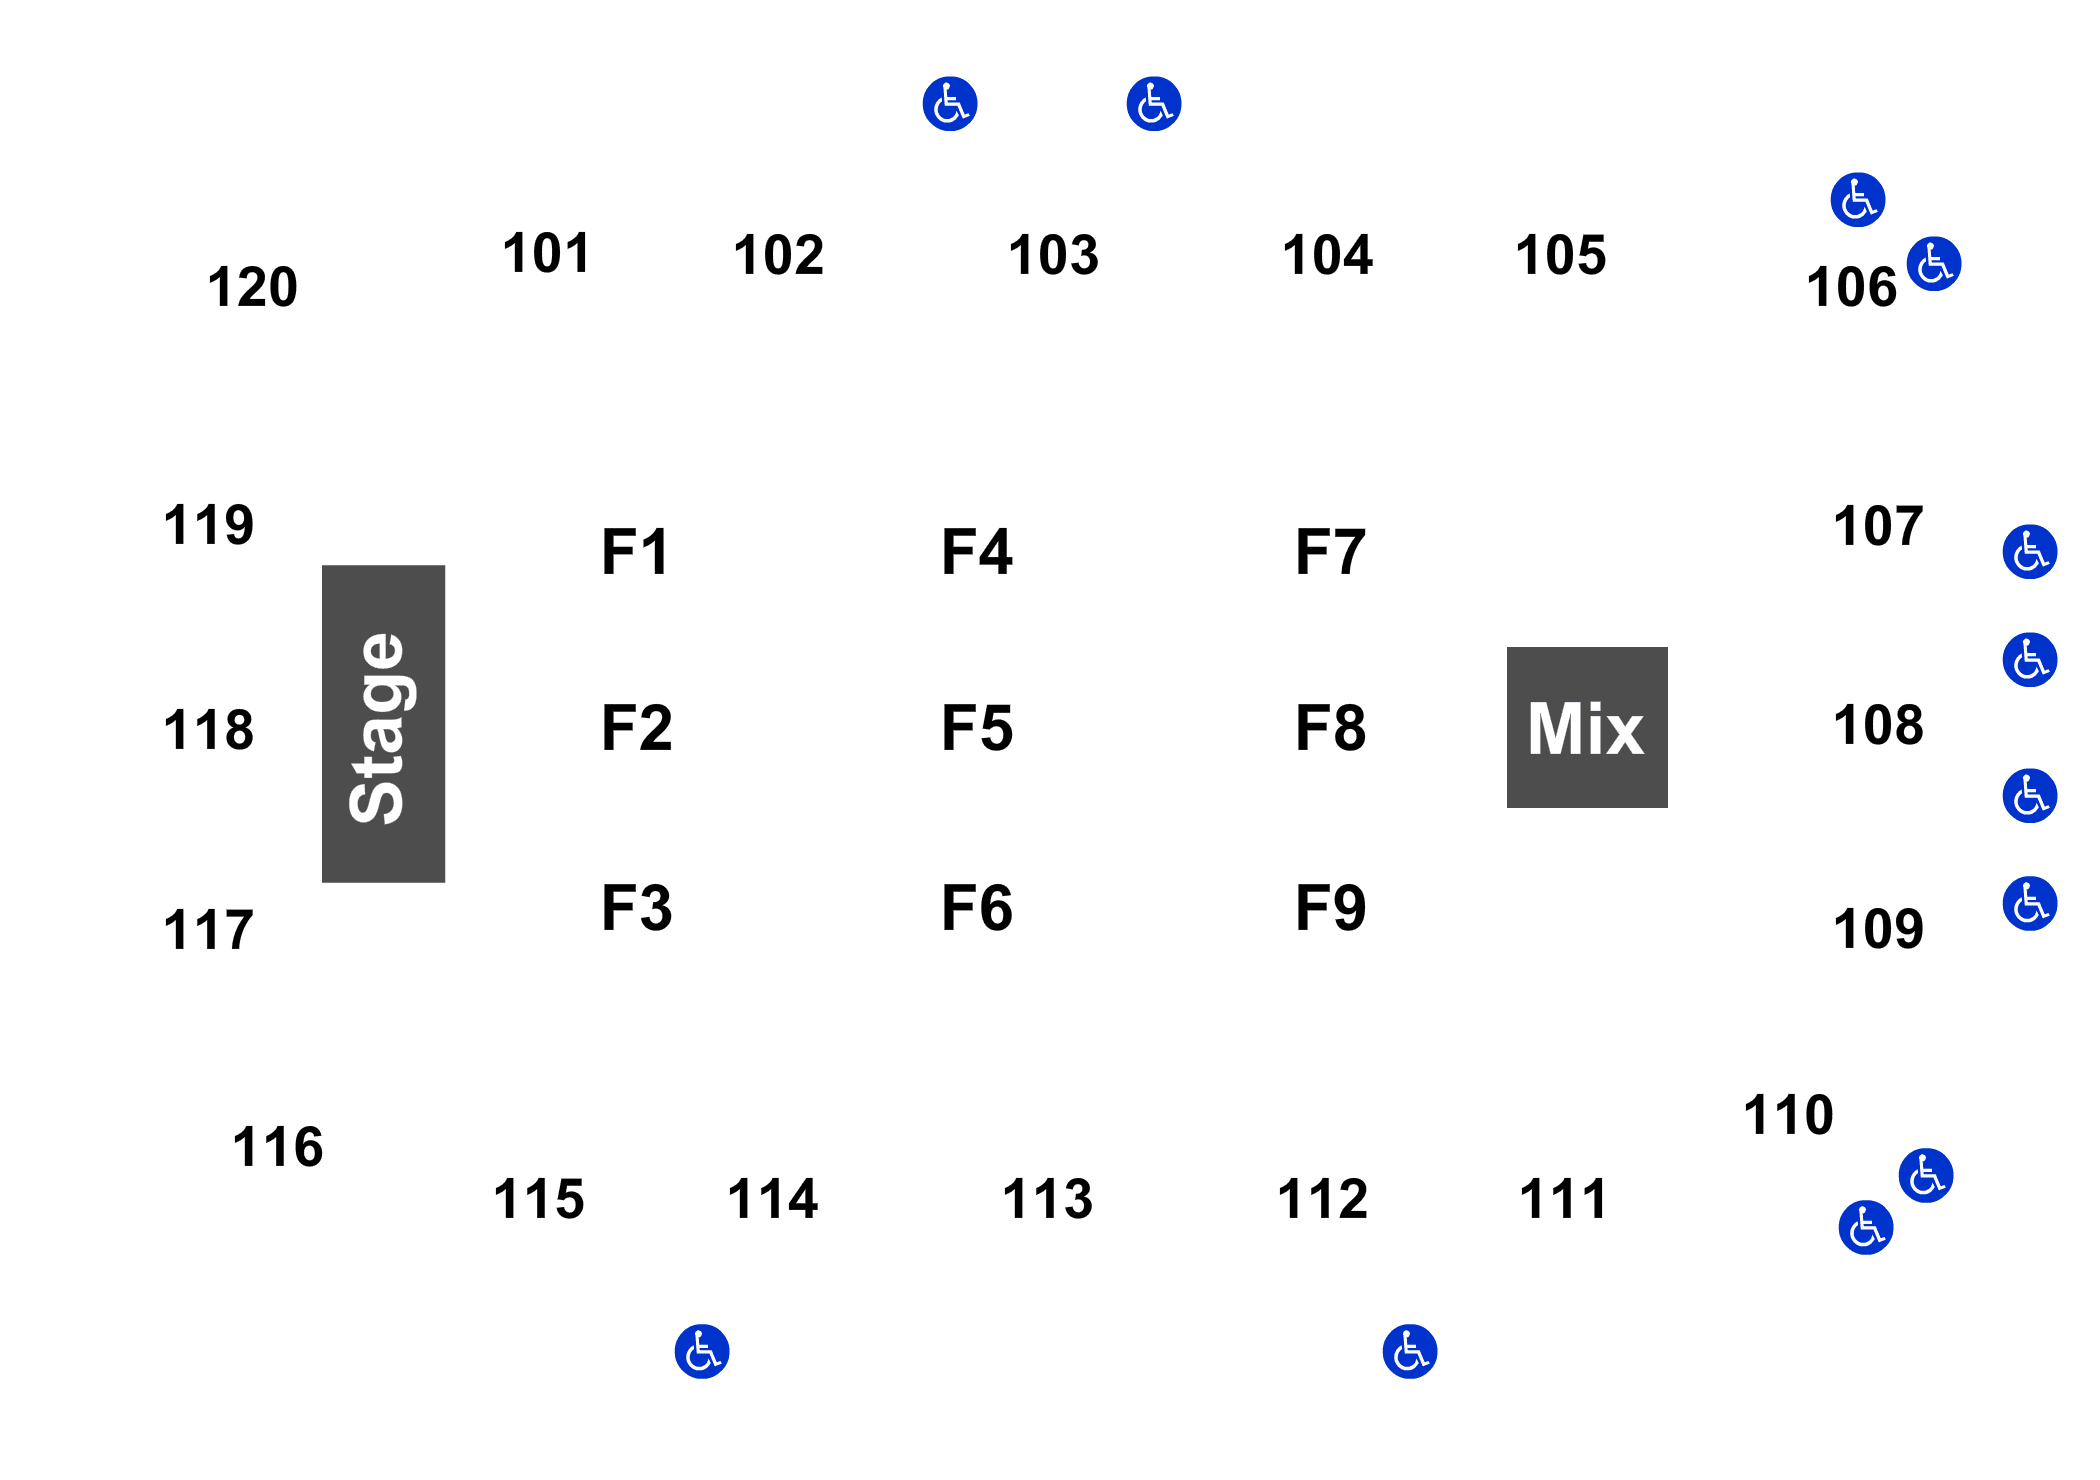 Agganis Arena Interactive Seating Chart